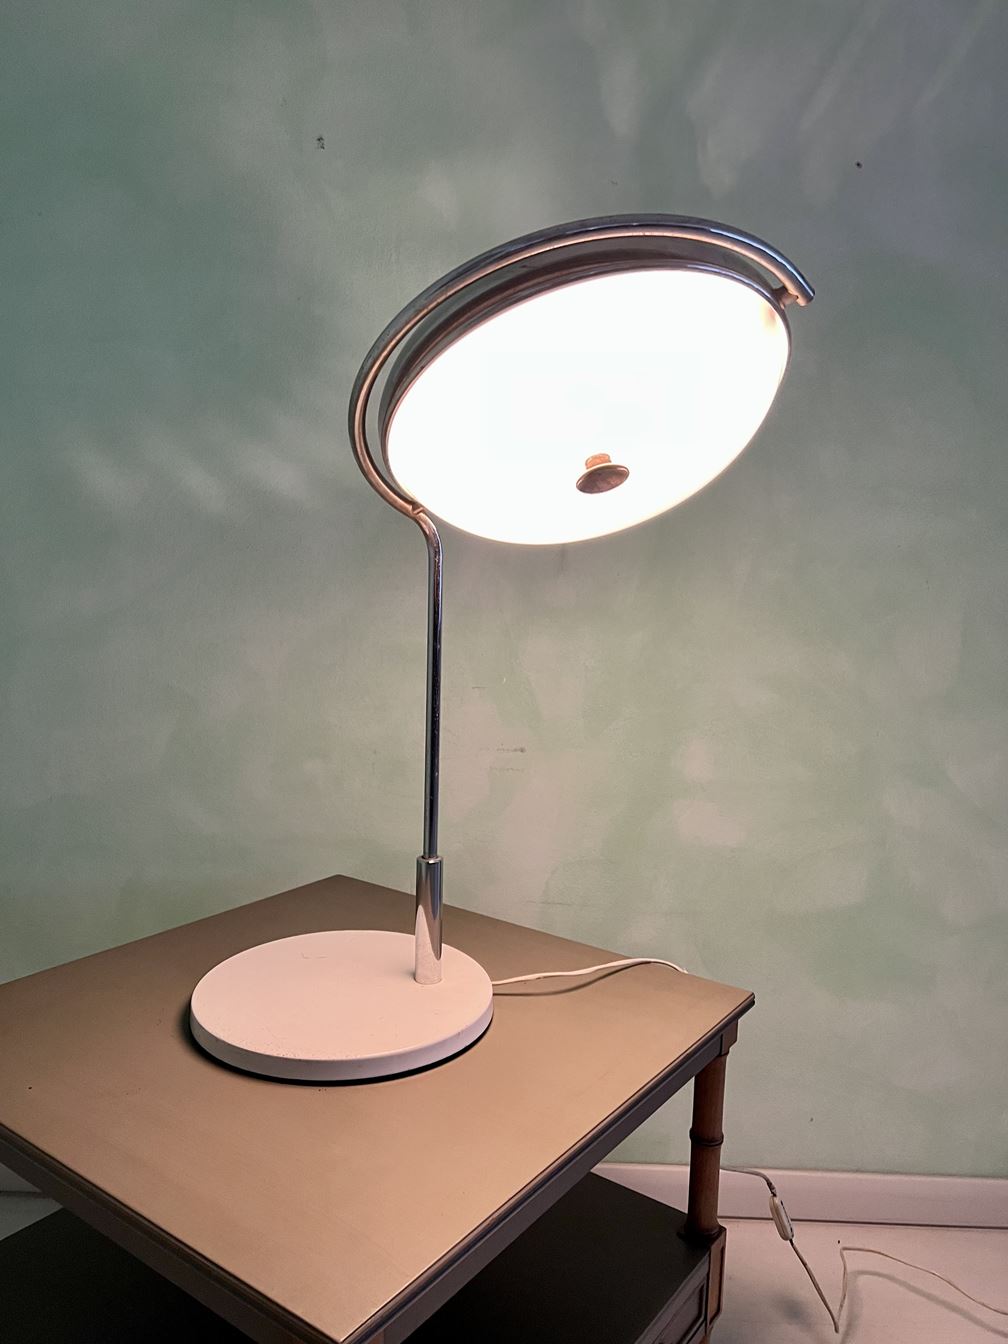 Reggiani lighting lamp from the 1970s